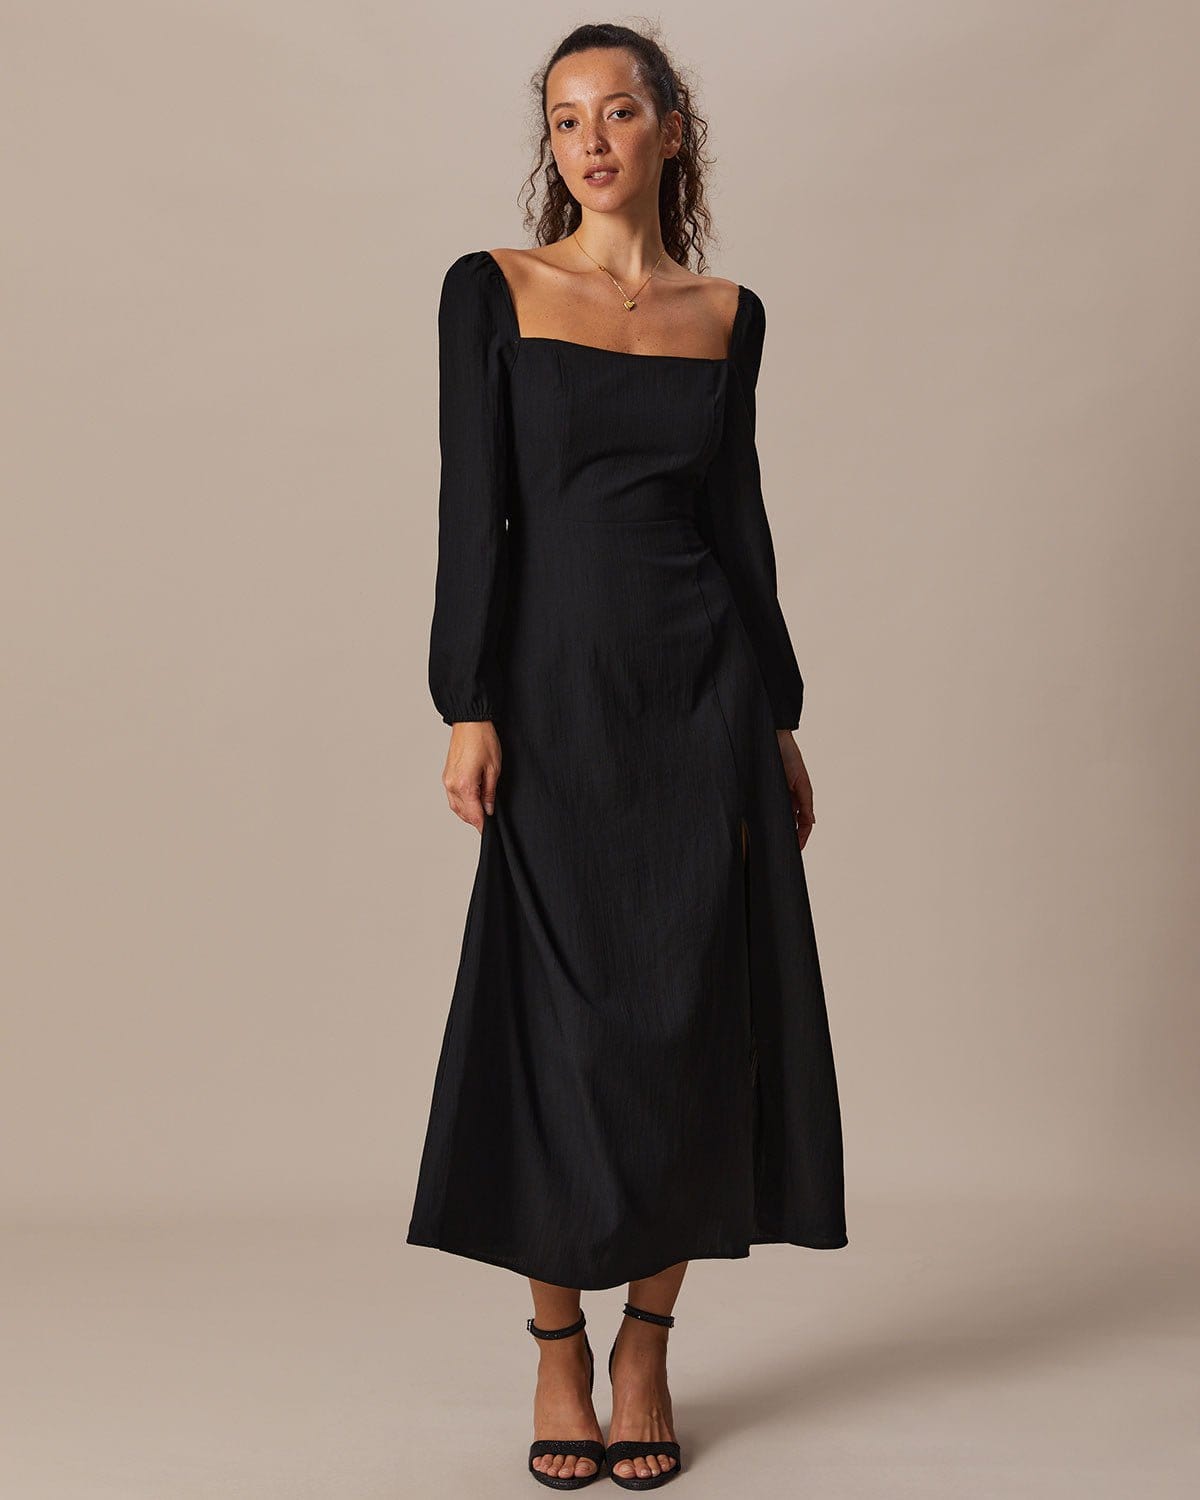 The Black Square Neck Long Sleeves Maxi Dress & Reviews - Black